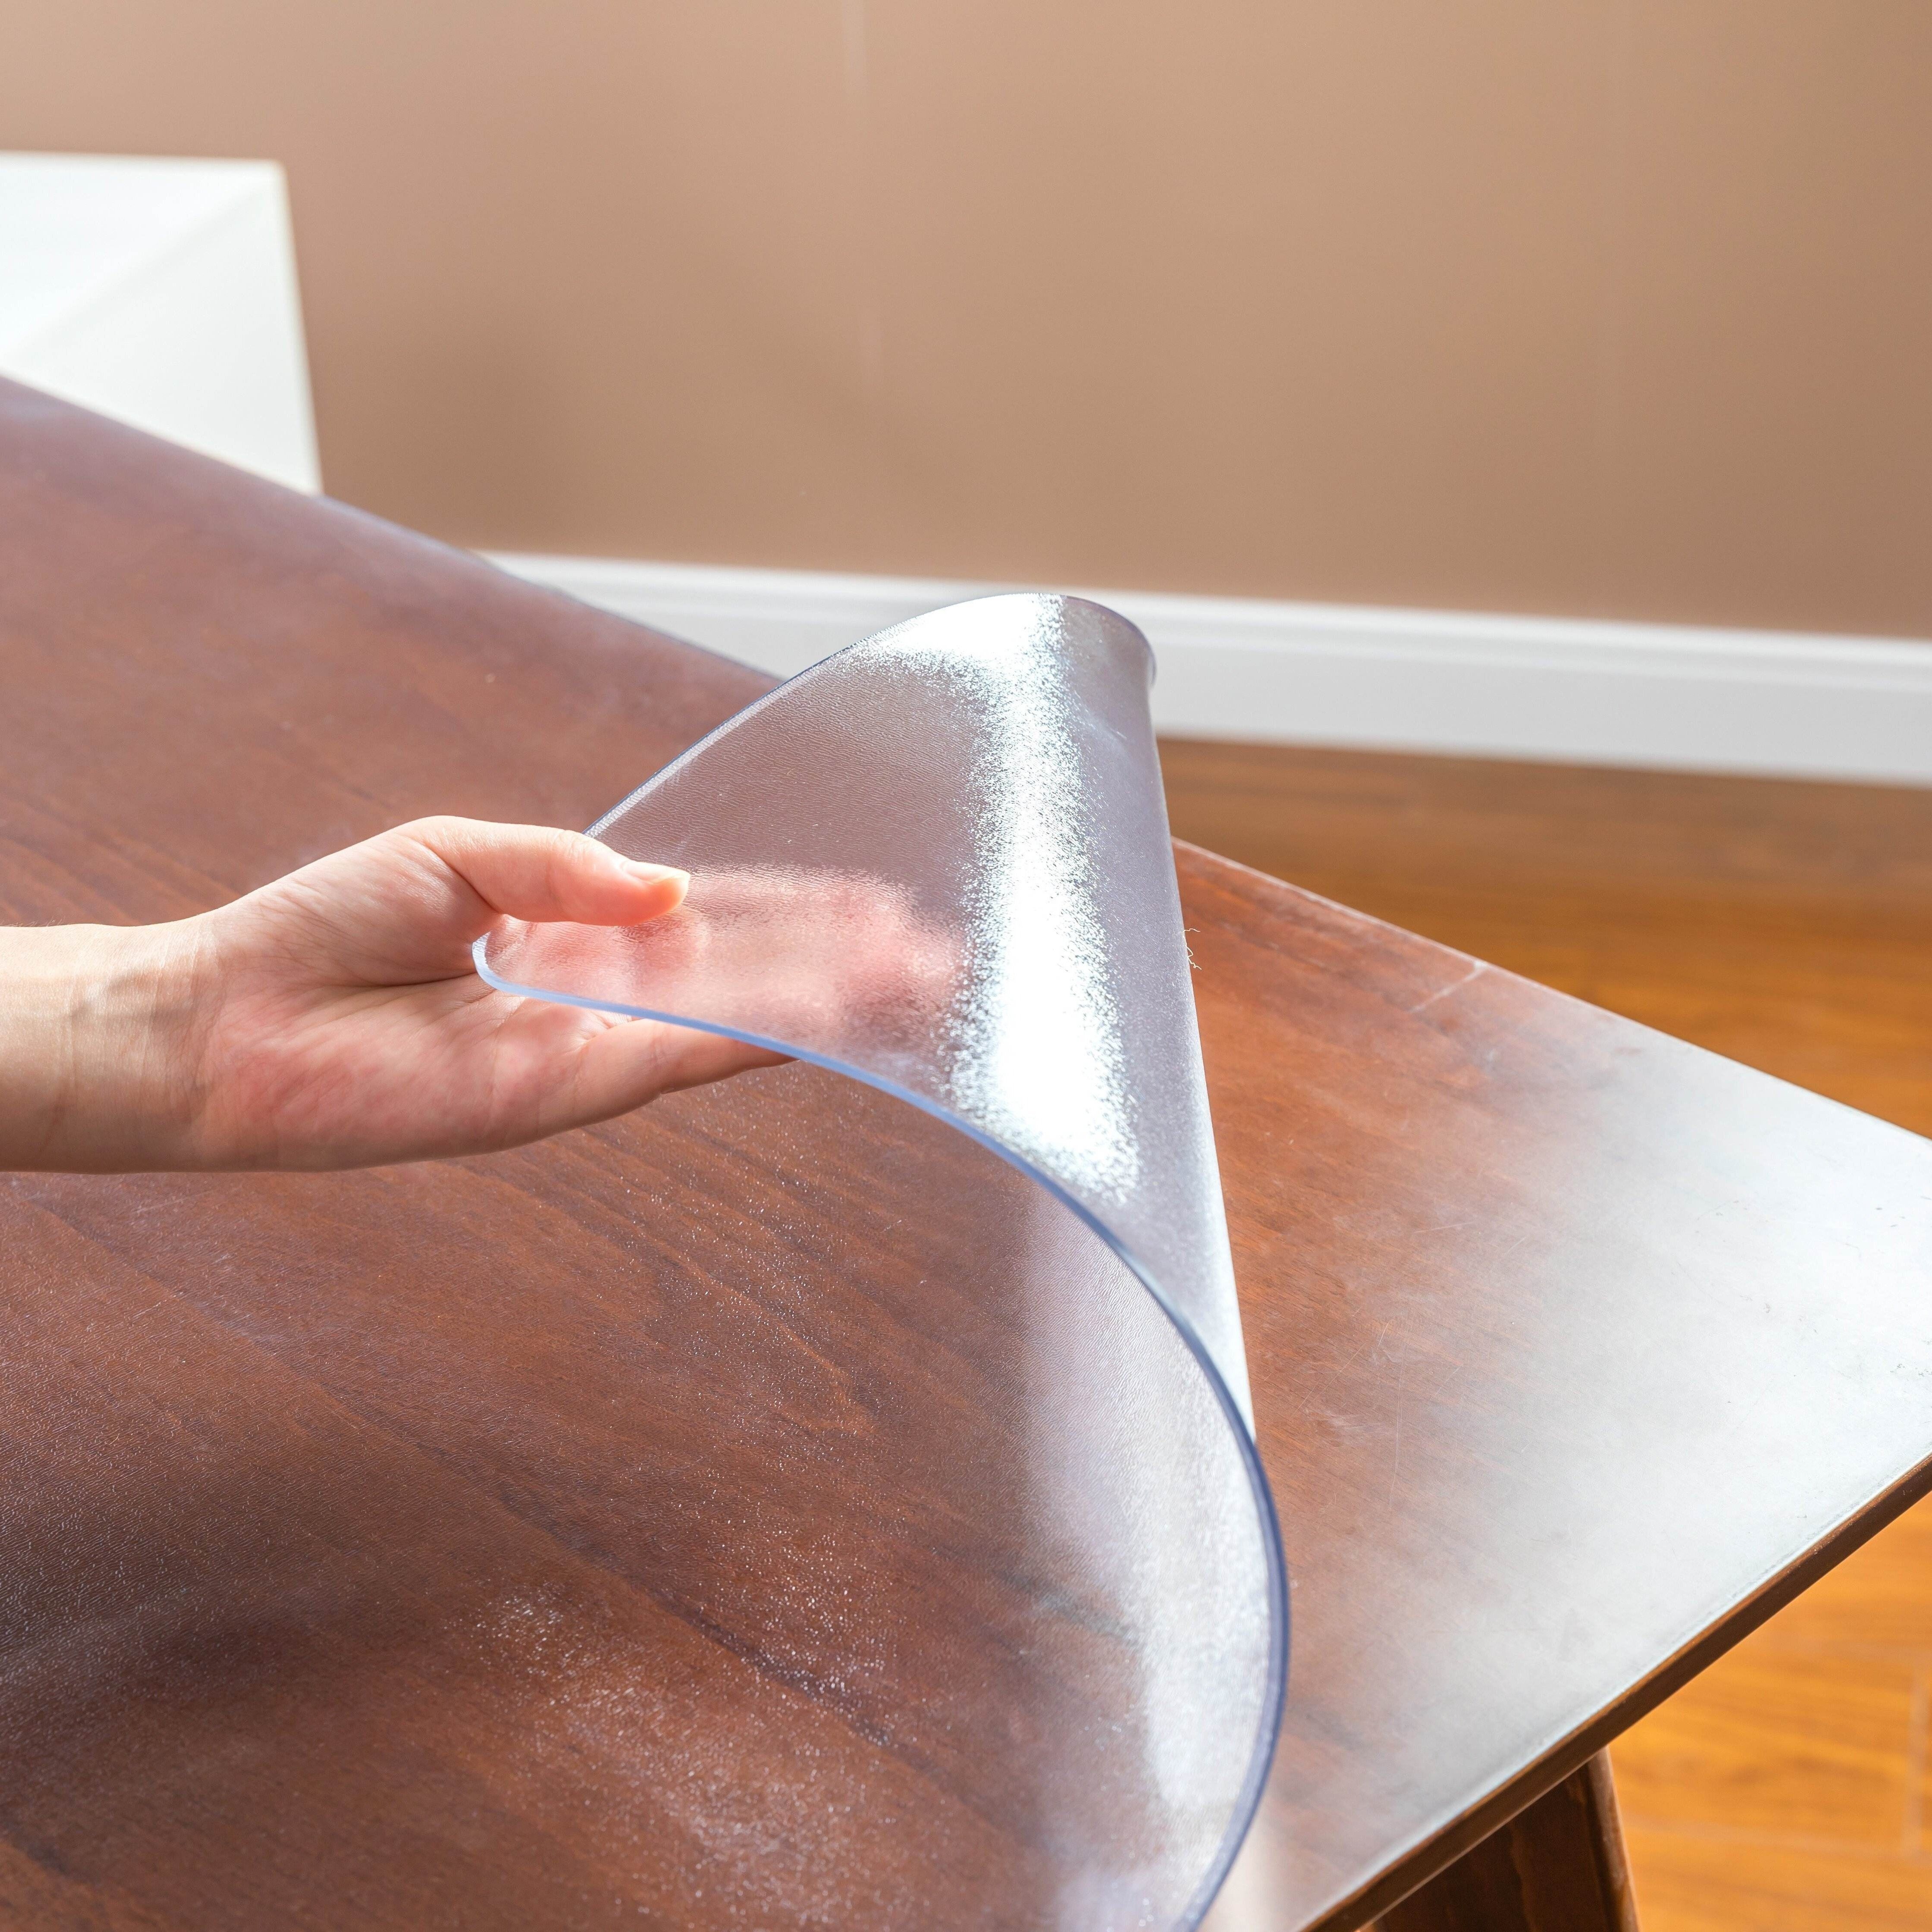 Soft Glass Protective Mat PVC Tablecloth Waterproof Transparent